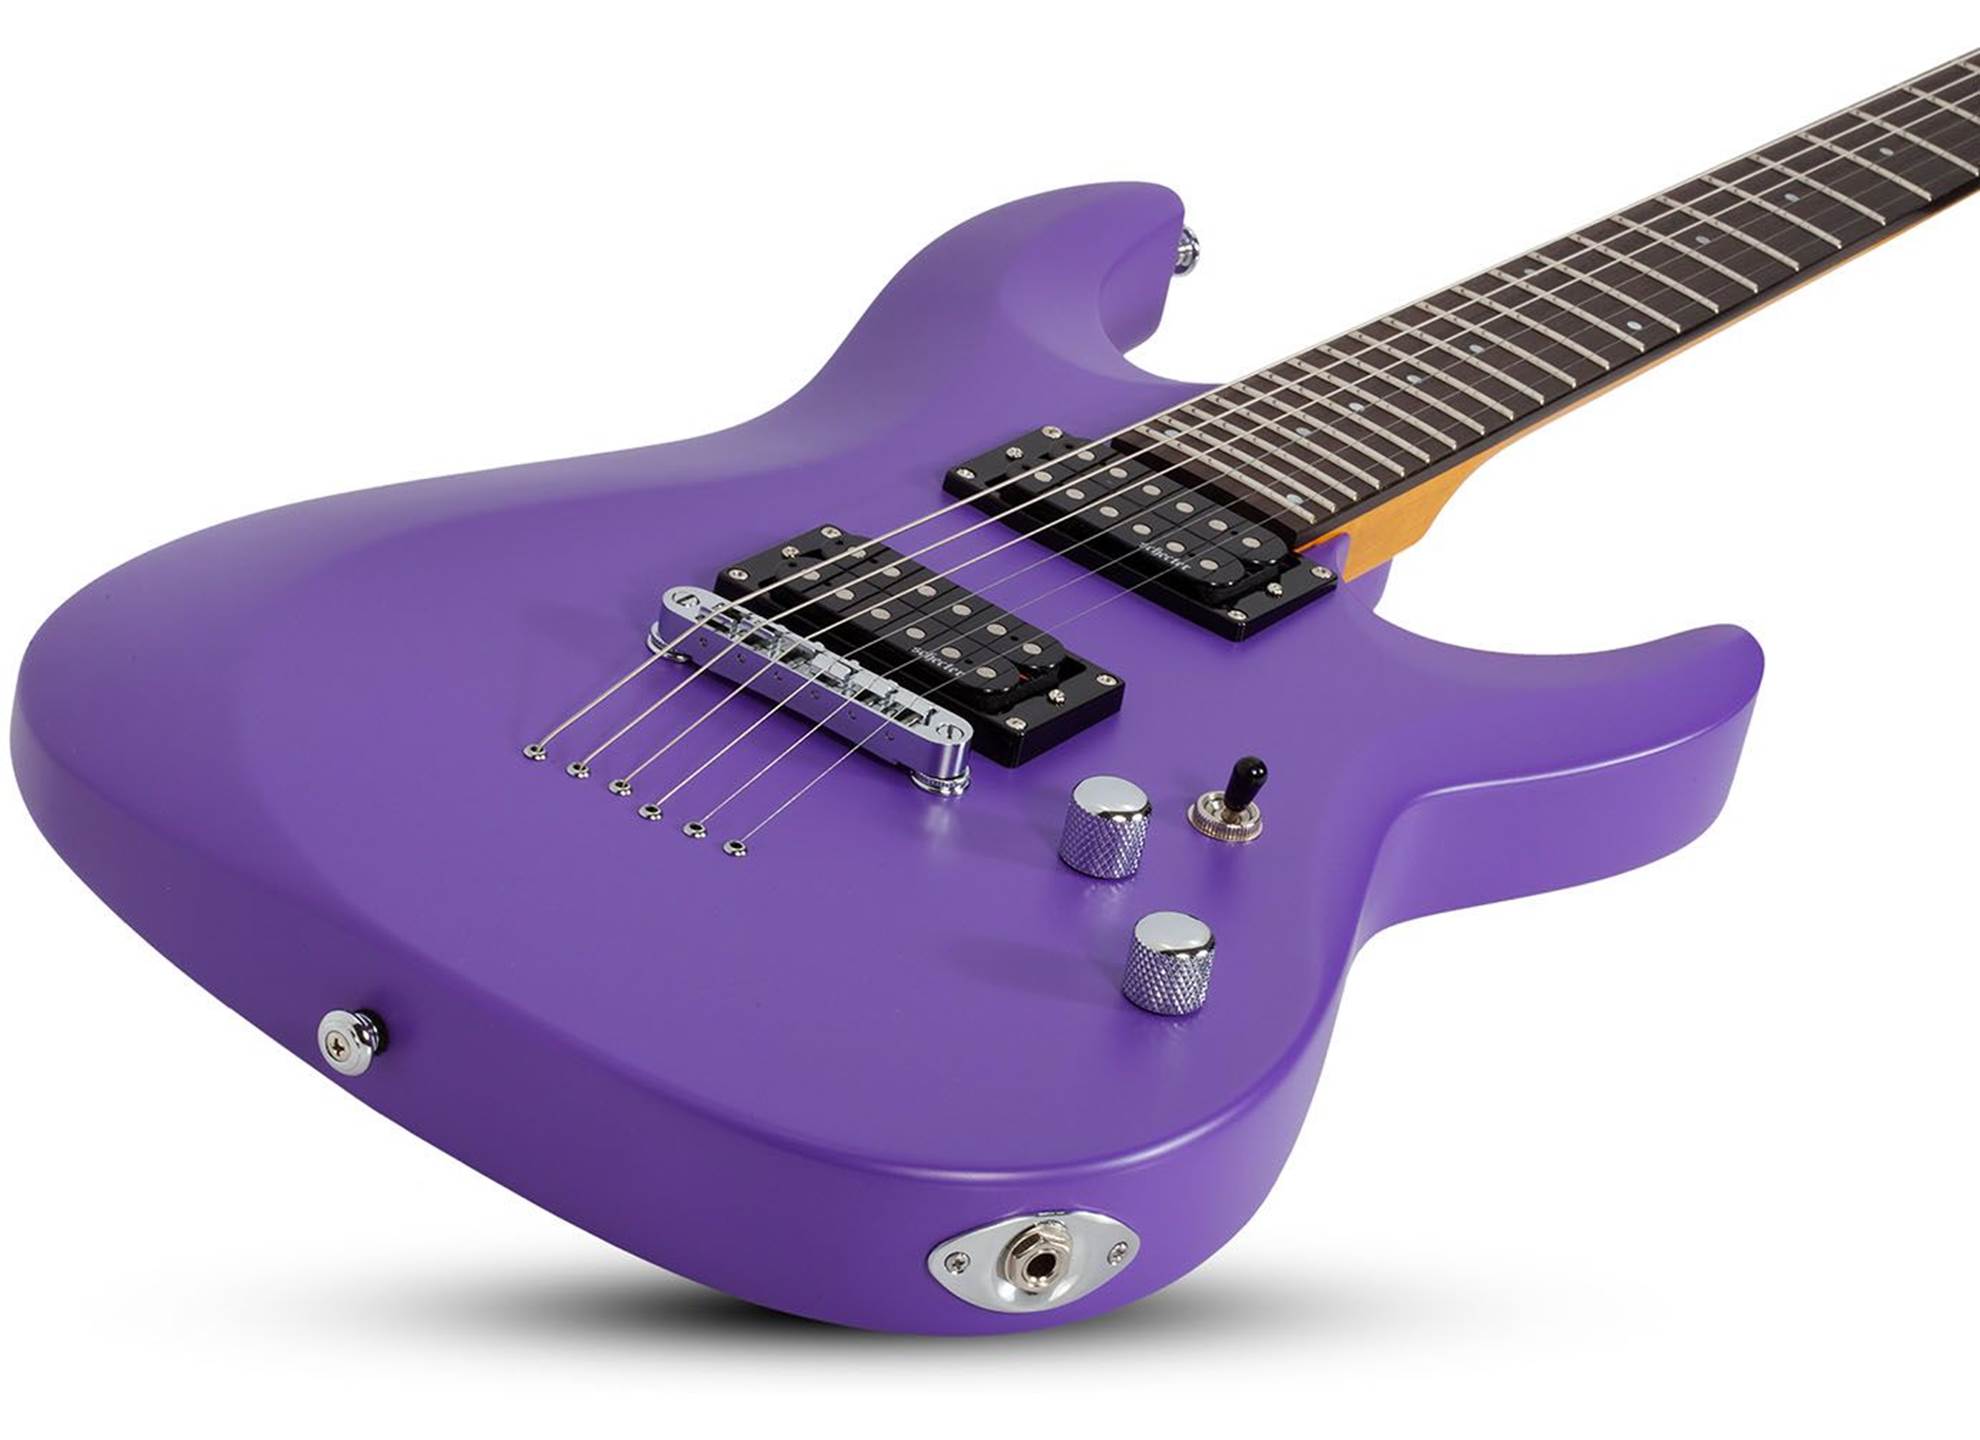 C-6 Deluxe Satin Purple